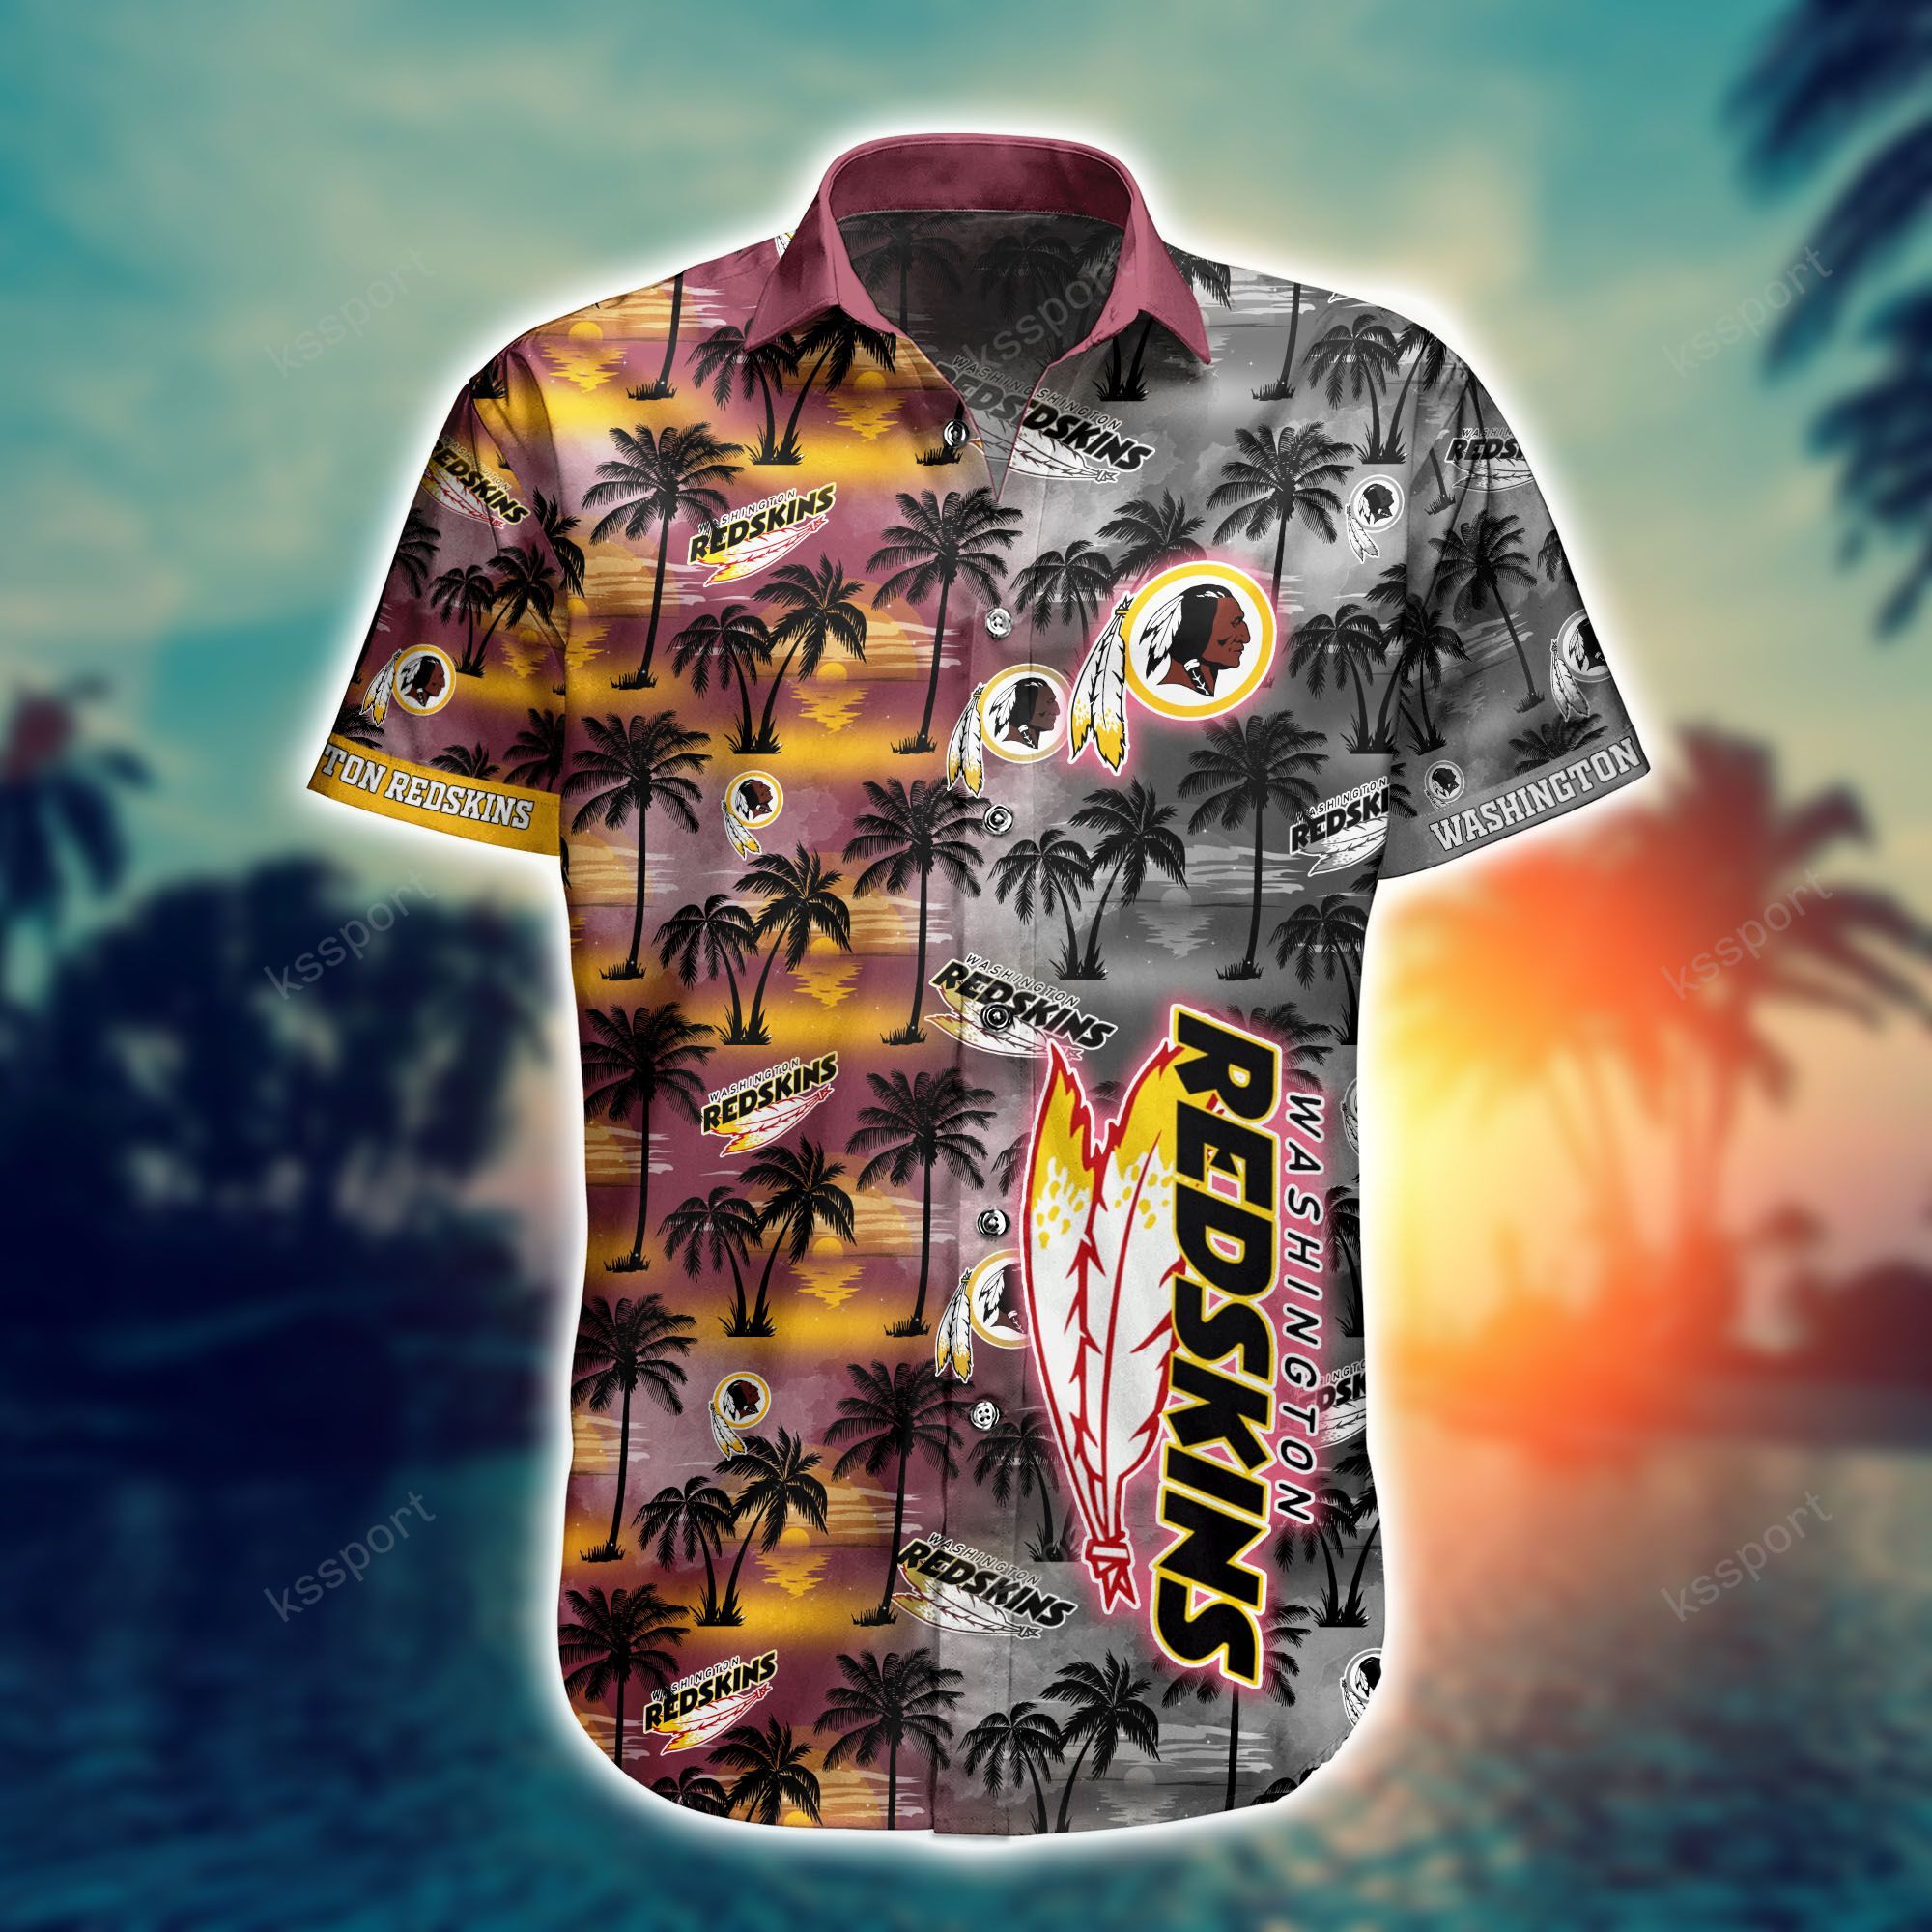 Hawaiian shirt and shorts is a great way to look stylish at a beach party 38